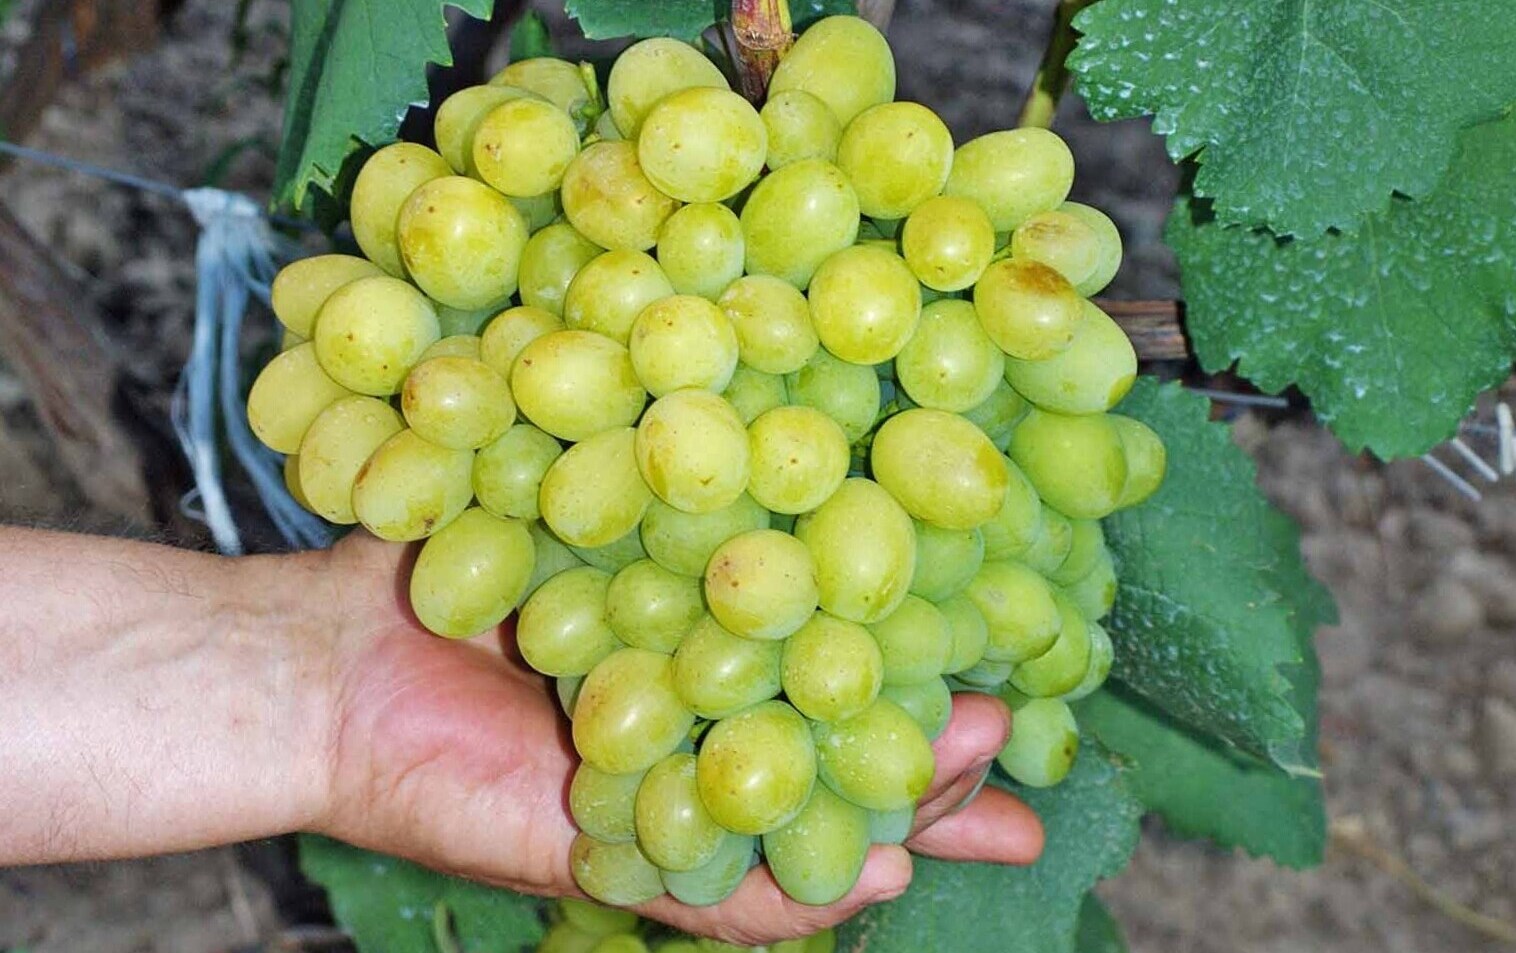 Сорт винограда раиса фото и описание